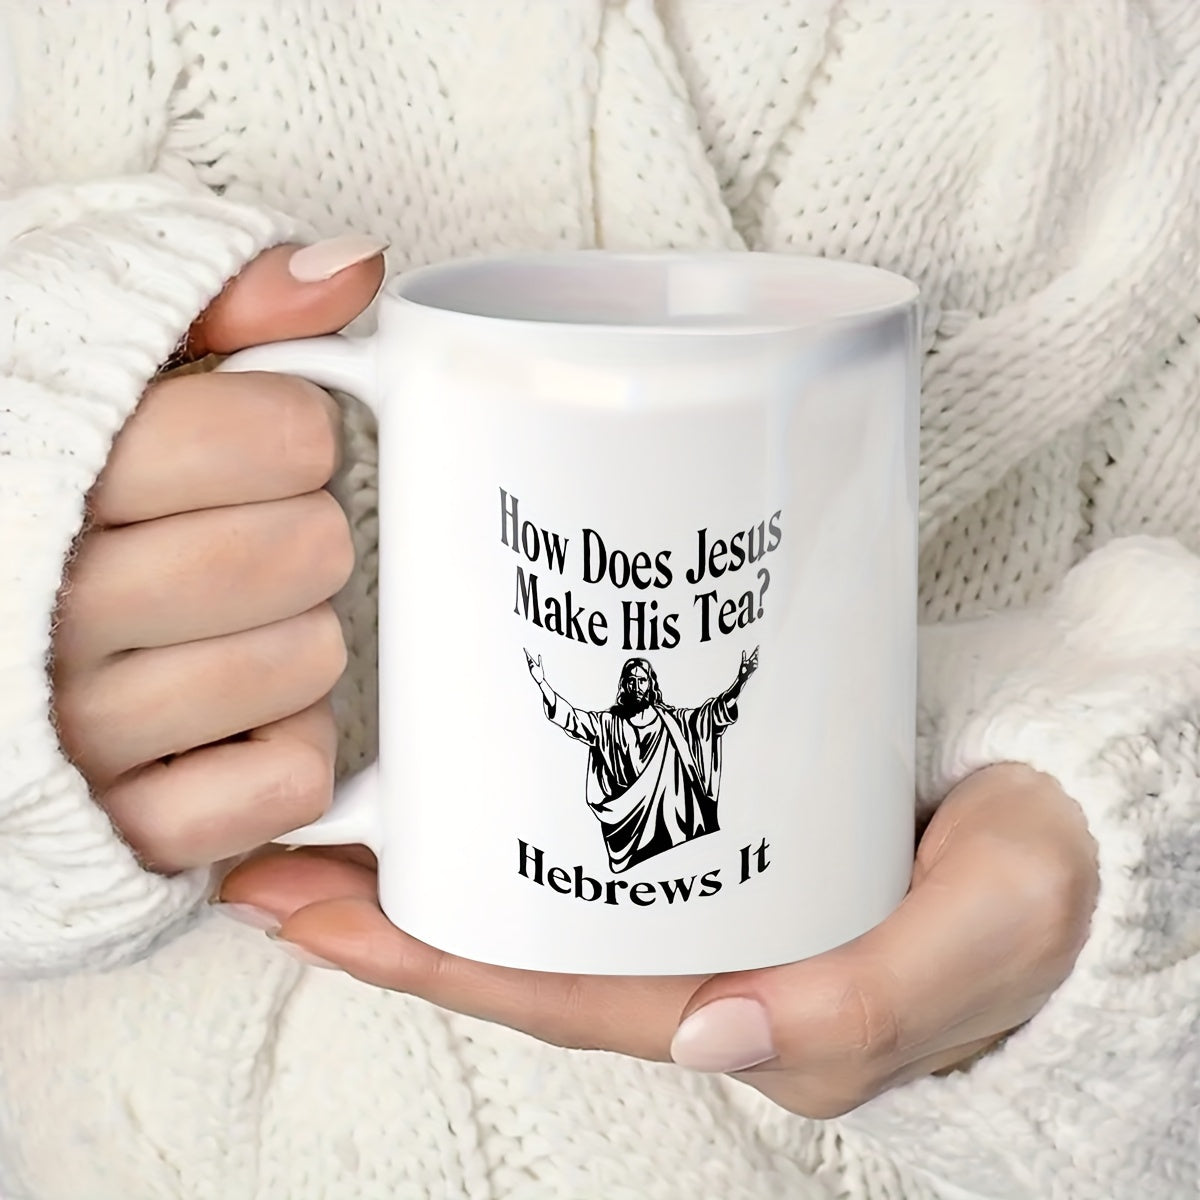 How Does Jesus Make His Tea? HEBREWS It Funny Christian White Ceramic Mug claimedbygoddesigns